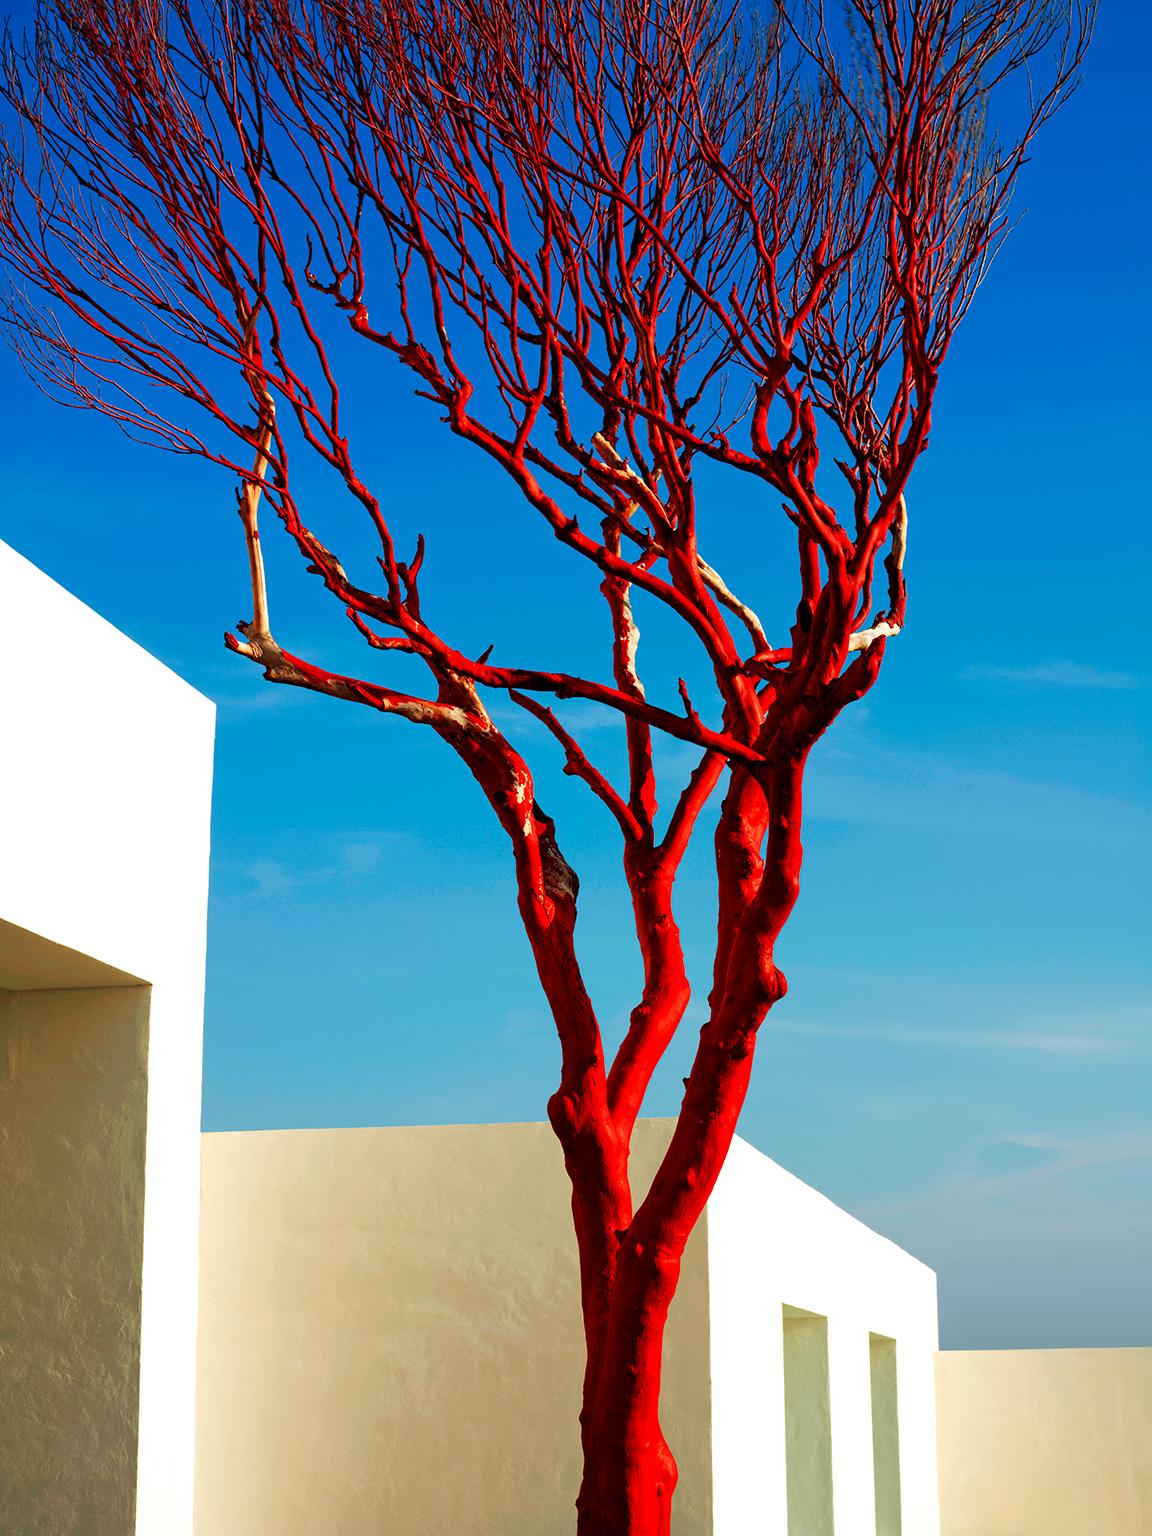  Cosmo Condina Color Photograph - Red Tree, Akumal, Mexico, 2007.